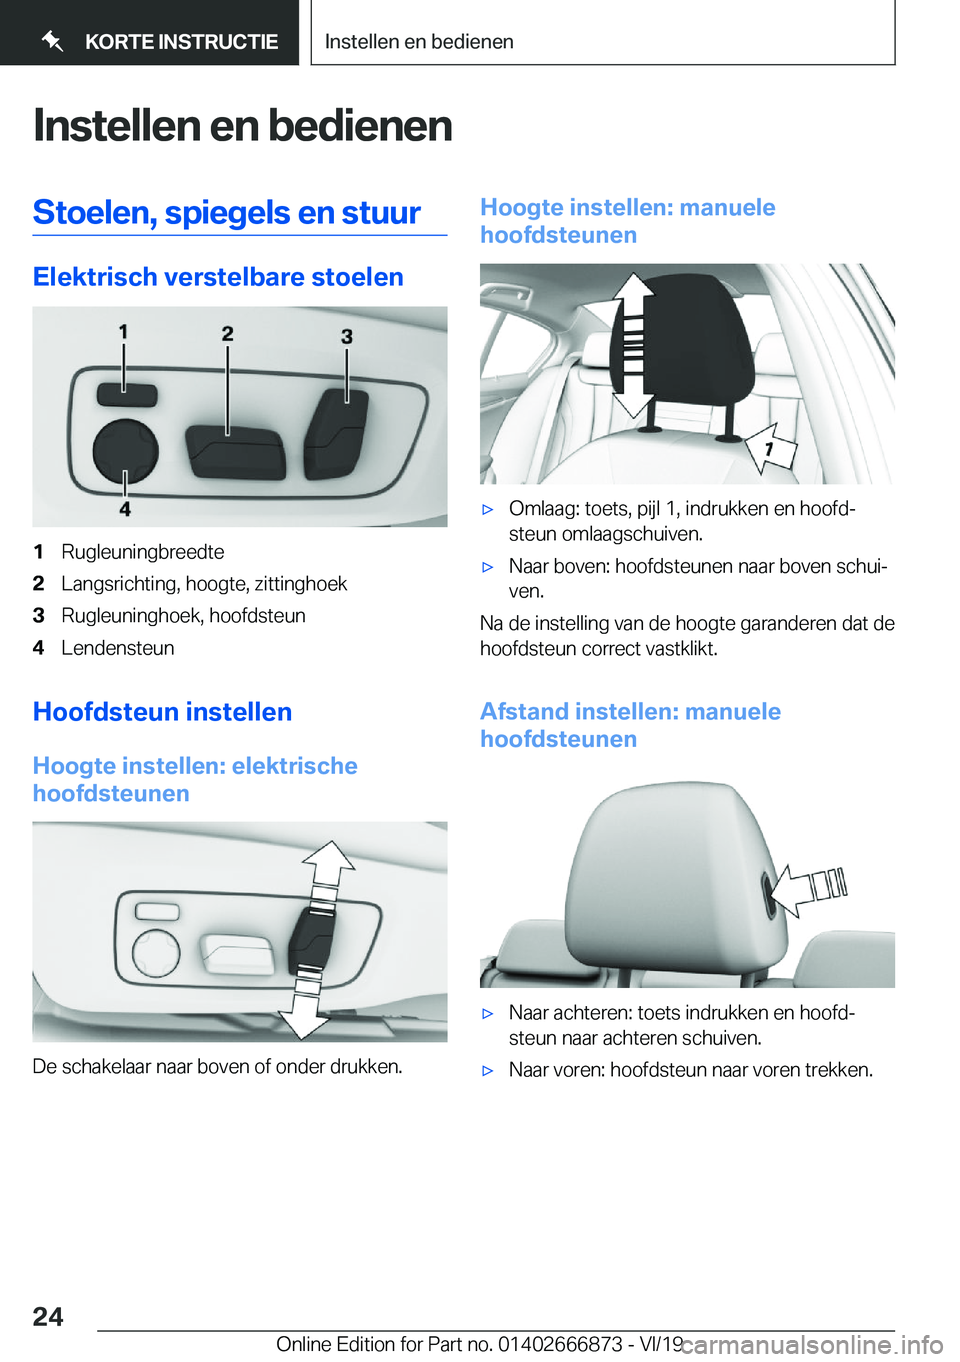 BMW X4 M 2020  Instructieboekjes (in Dutch) �I�n�s�t�e�l�l�e�n��e�n��b�e�d�i�e�n�e�n�S�t�o�e�l�e�n�,��s�p�i�e�g�e�l�s��e�n��s�t�u�u�r
�E�l�e�k�t�r�i�s�c�h��v�e�r�s�t�e�l�b�a�r�e��s�t�o�e�l�e�n
�1�R�u�g�l�e�u�n�i�n�g�b�r�e�e�d�t�e�2�L�a�n